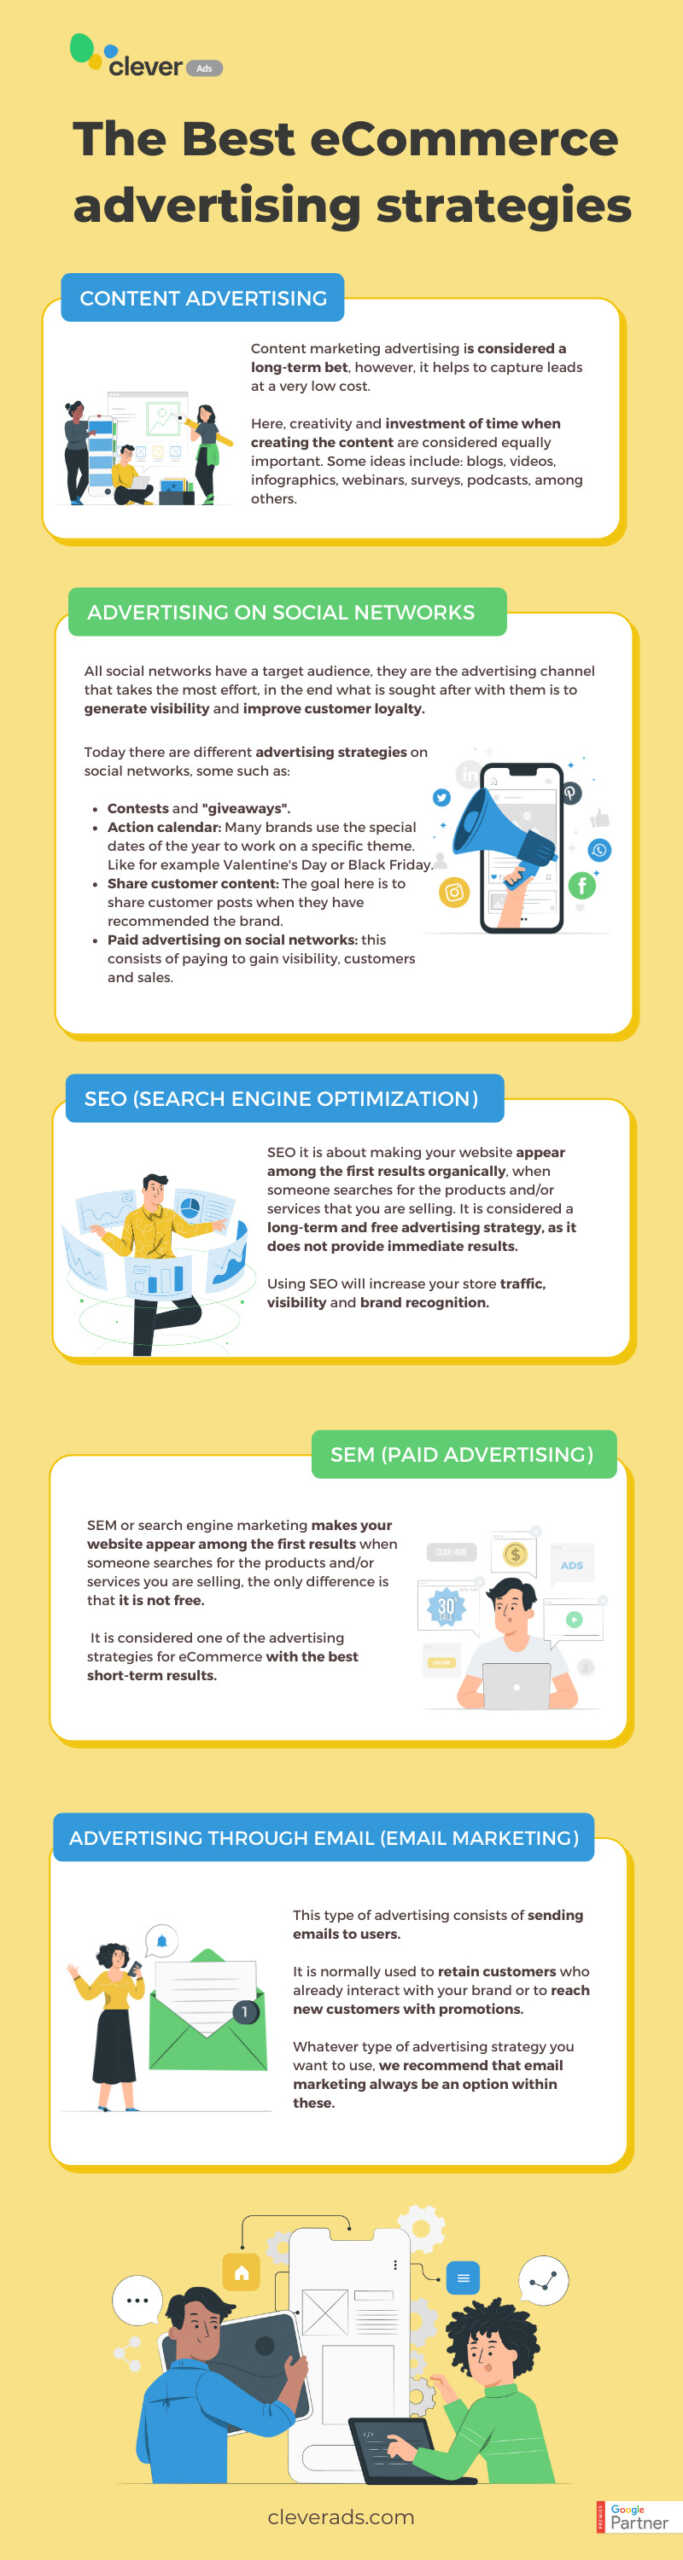 ecommerce advertising strategies infographic